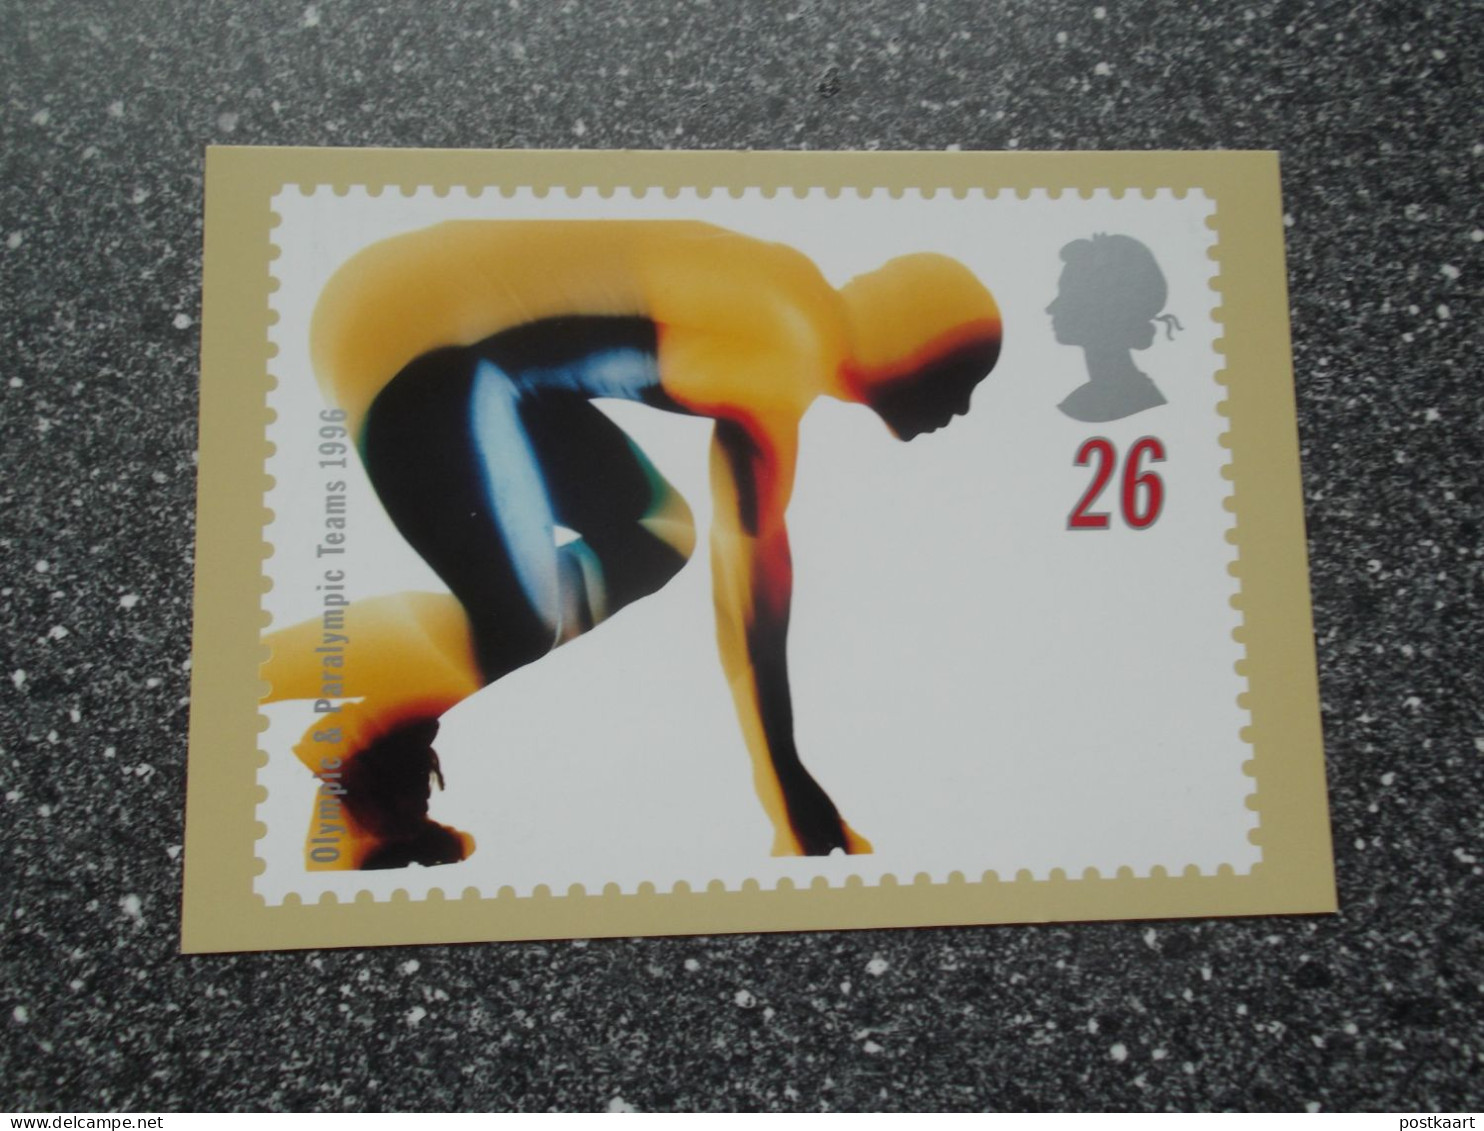 POSTCARD Stamp UK - Olympic & Paralympic Teams 1996 - 26 - Briefmarken (Abbildungen)